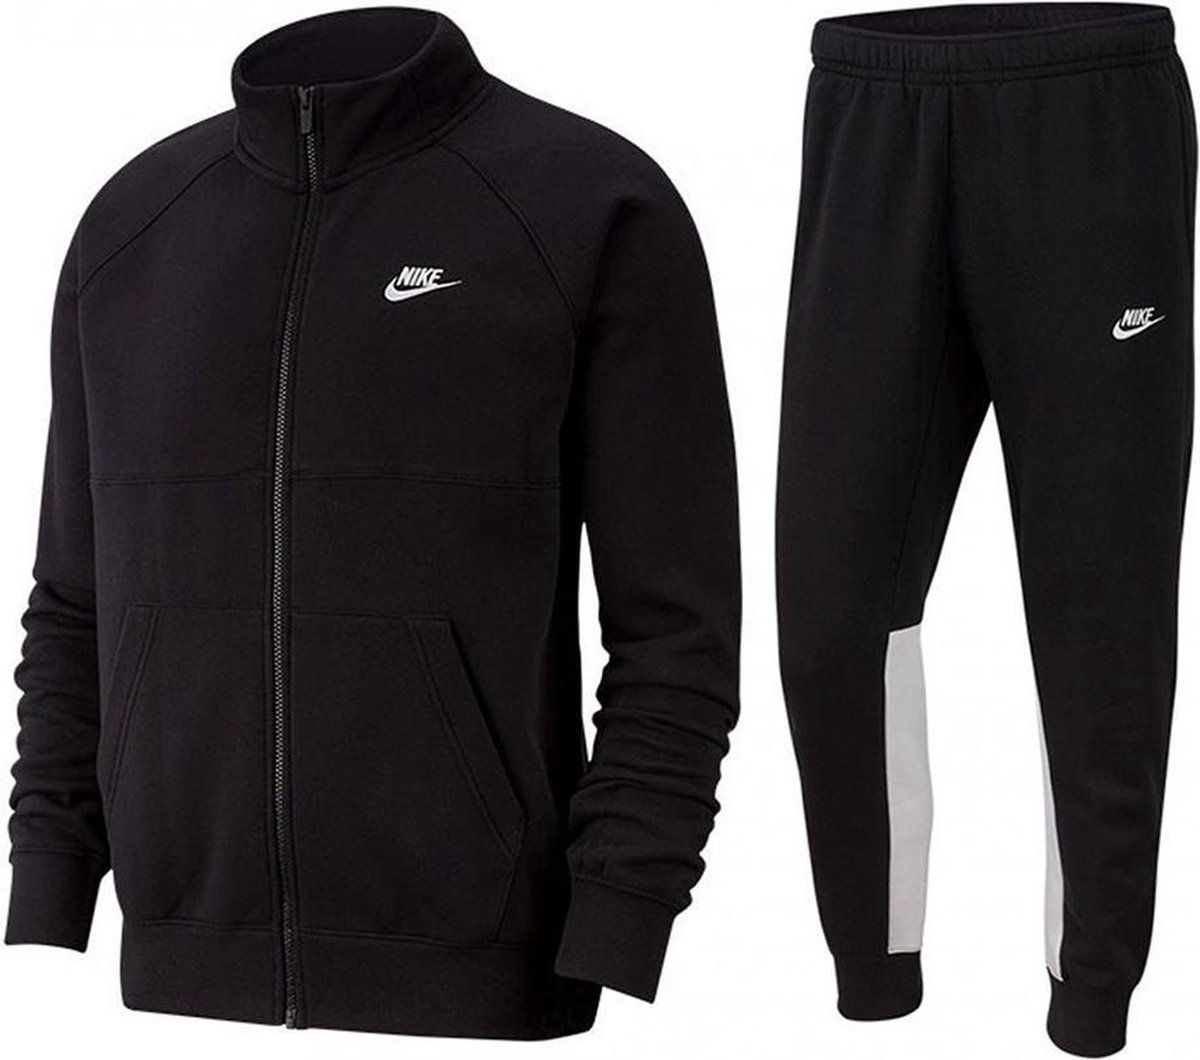 pad koper wang Nike Sportswear CE Fleece trainingspak heren zwart/wit | bol.com